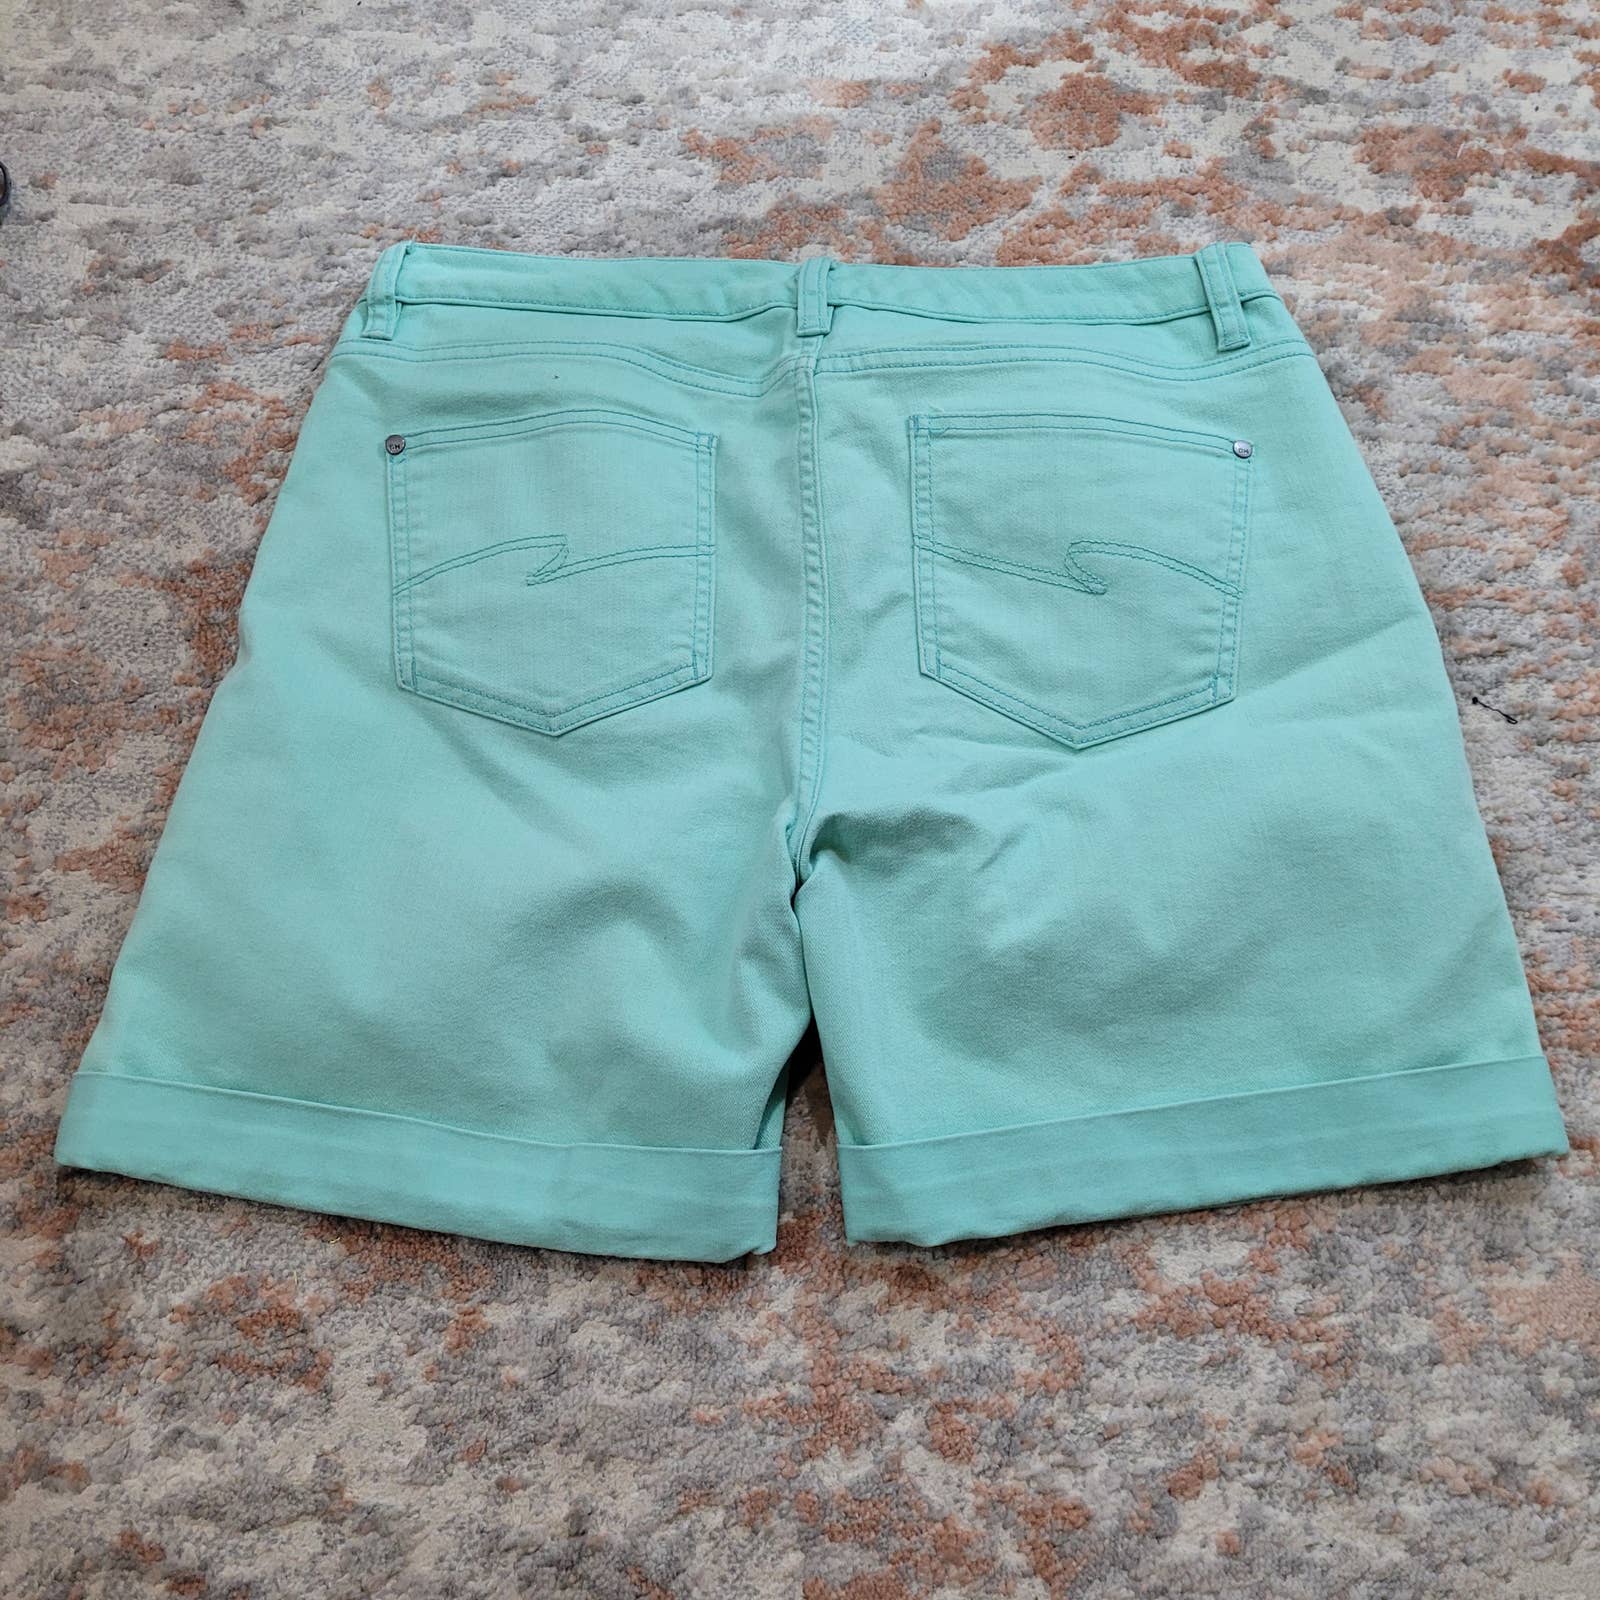 Denver Hayes Pastel Turquoise Denim Shorts - Size 12Markita's ClosetDenver Hayes